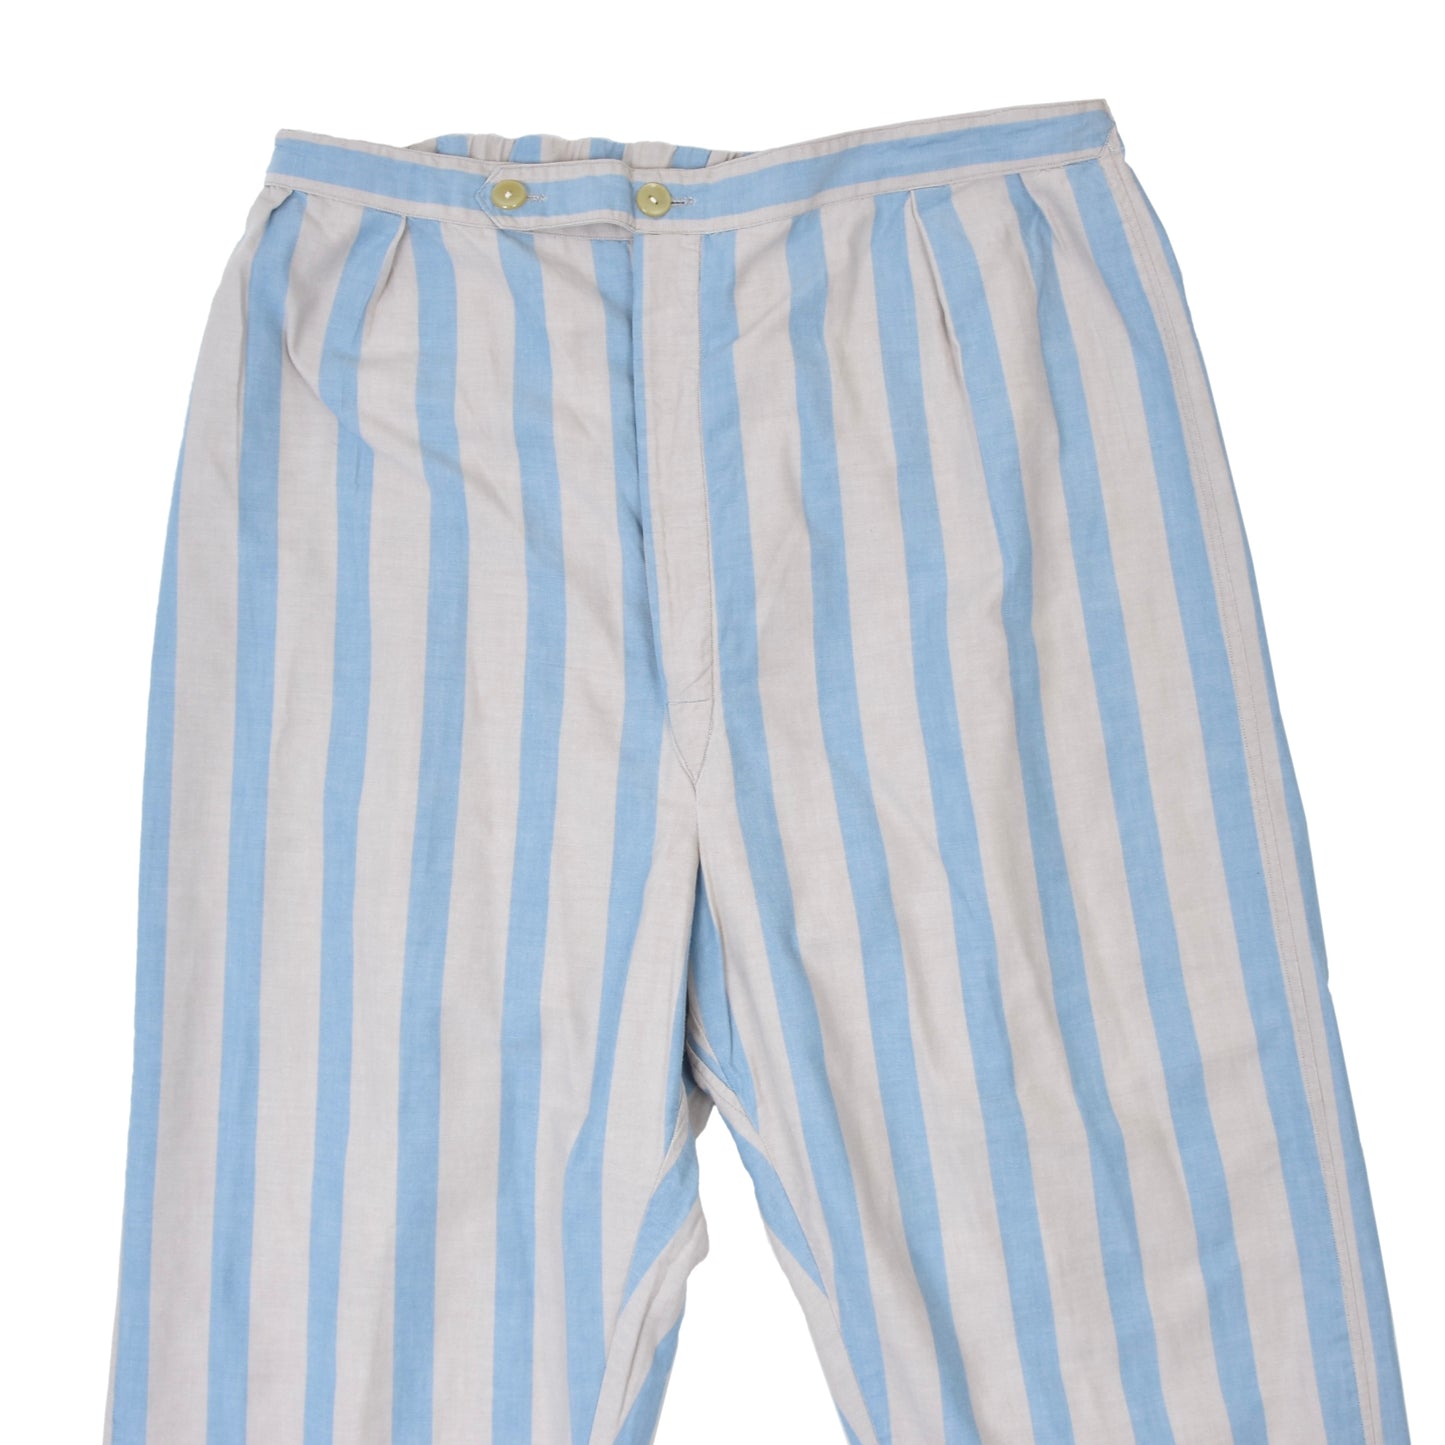 Hermine Hejny Bespoke Cotton Pyjama Set ca. 61cm - Striped